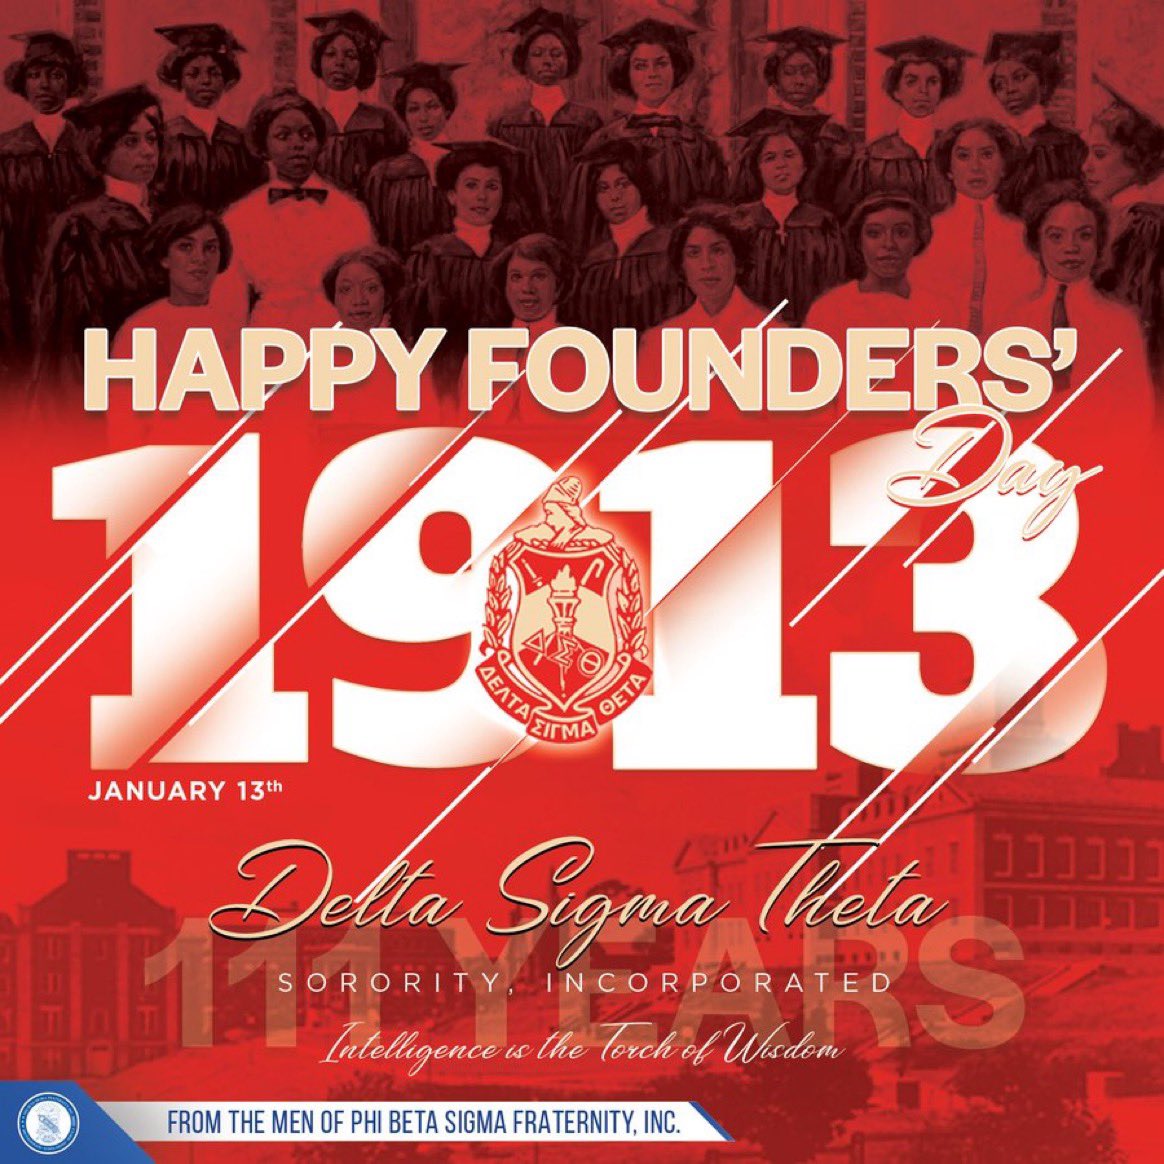 Happy Founders' Day to the ladies of Delta Sigma Theta Sorority, Inc. #pbs1914 #Sigma110